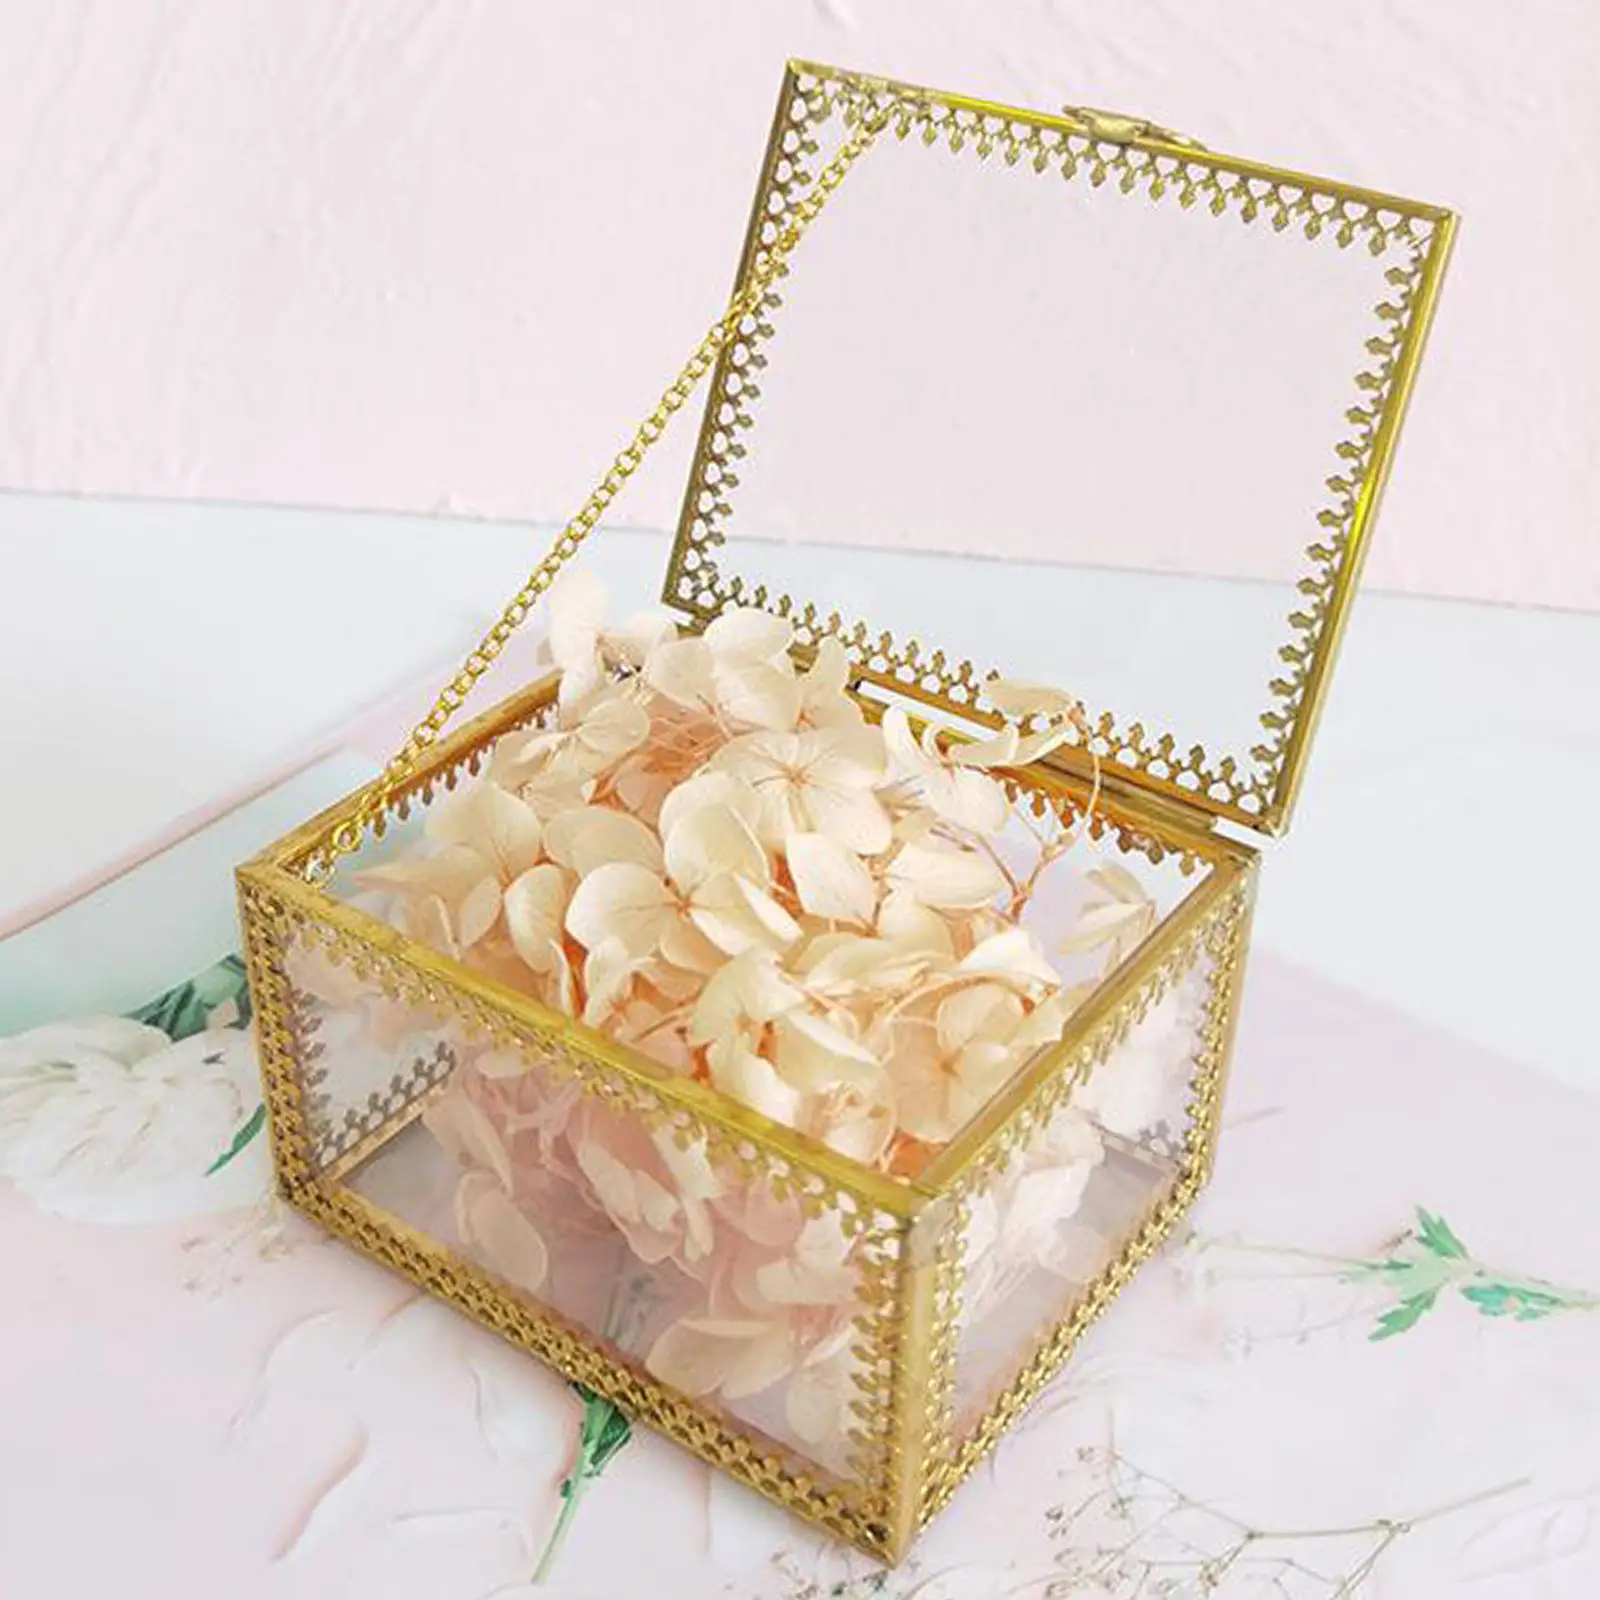 Jewelry Display Organizer Glass Box Display Jewelry Clear Gold For Keepsake Card Small Wedding Acrylic Shadow Table With Lid